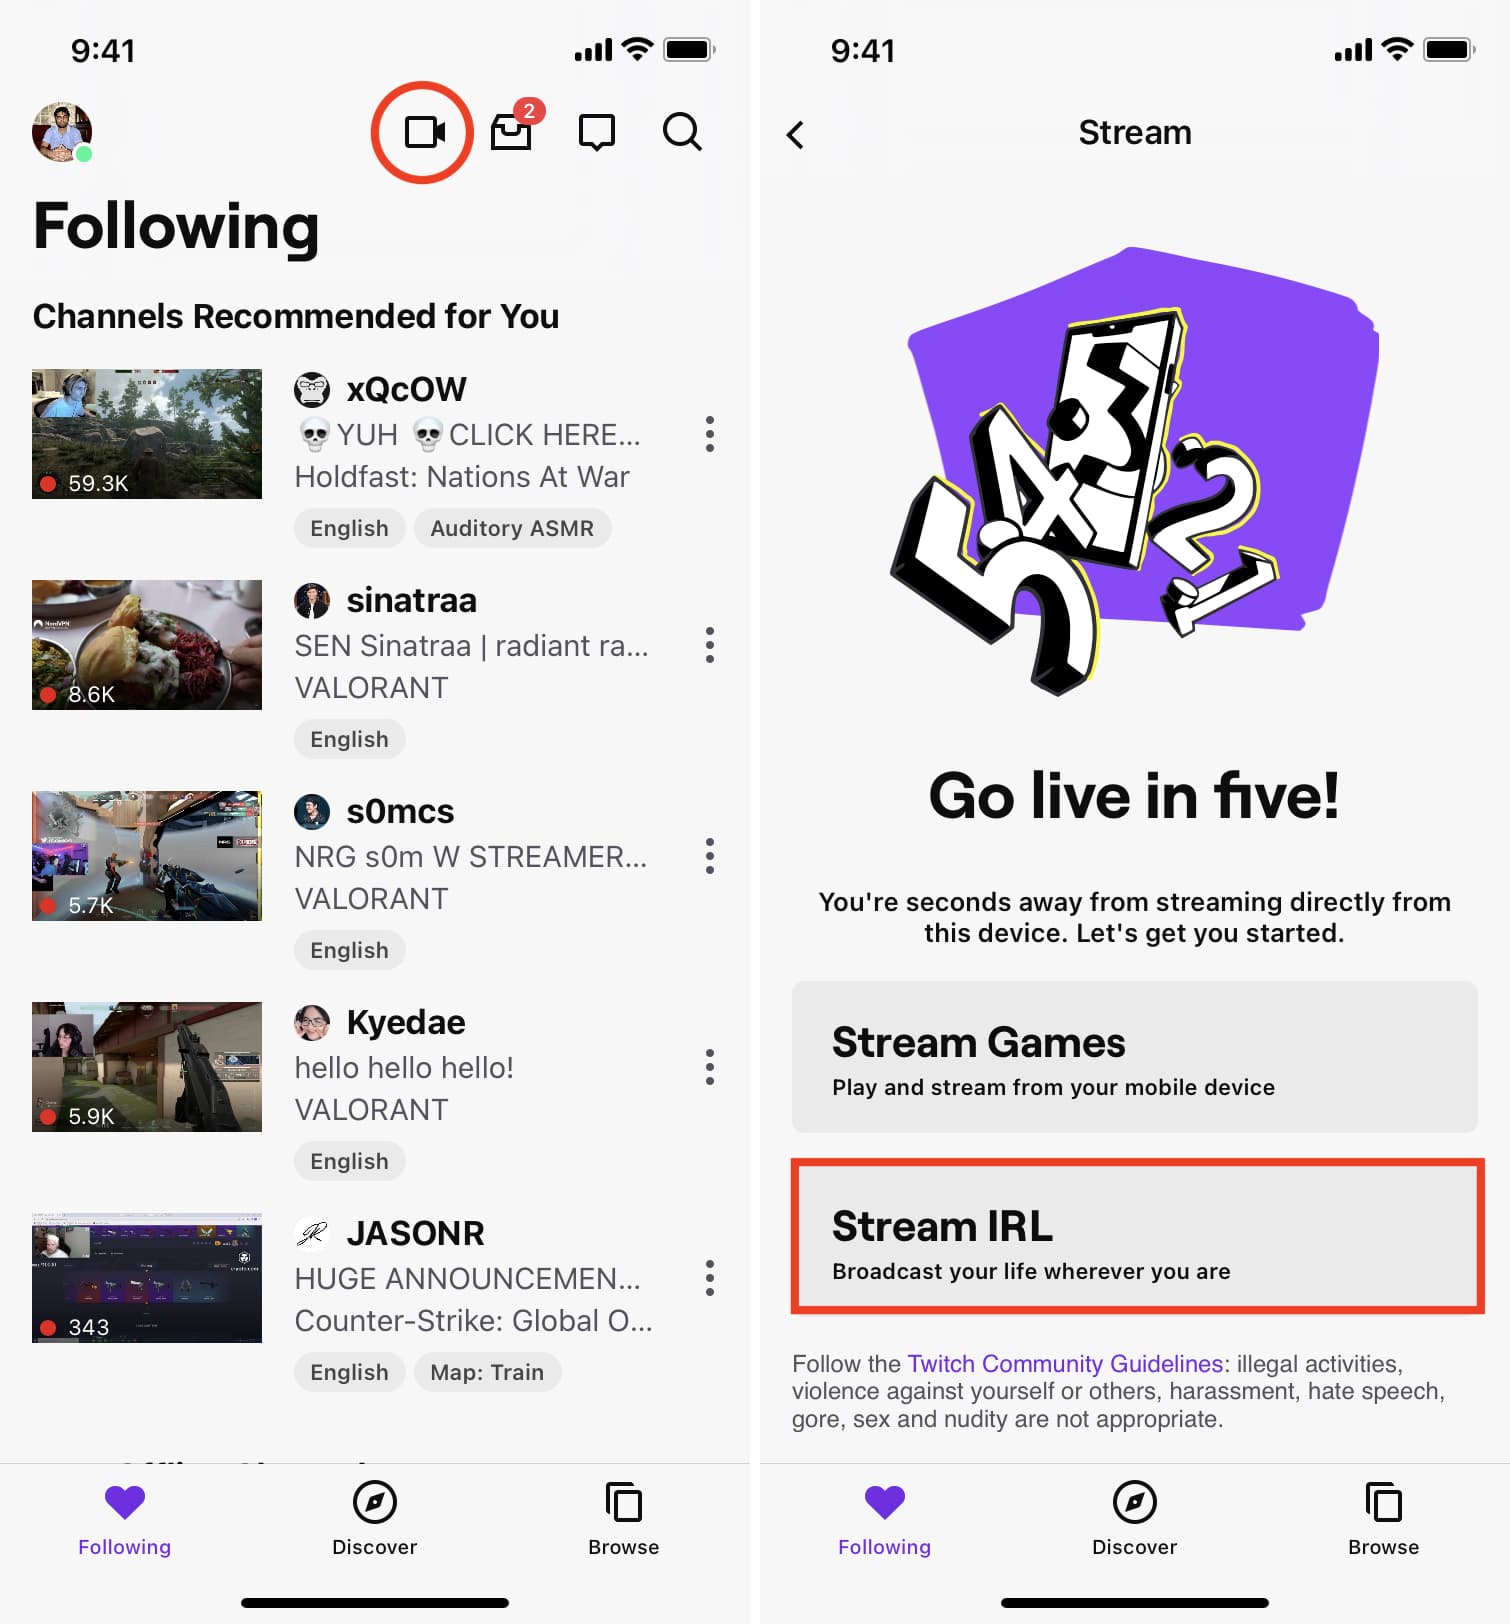 Stream IRL on Twitch using iPhone